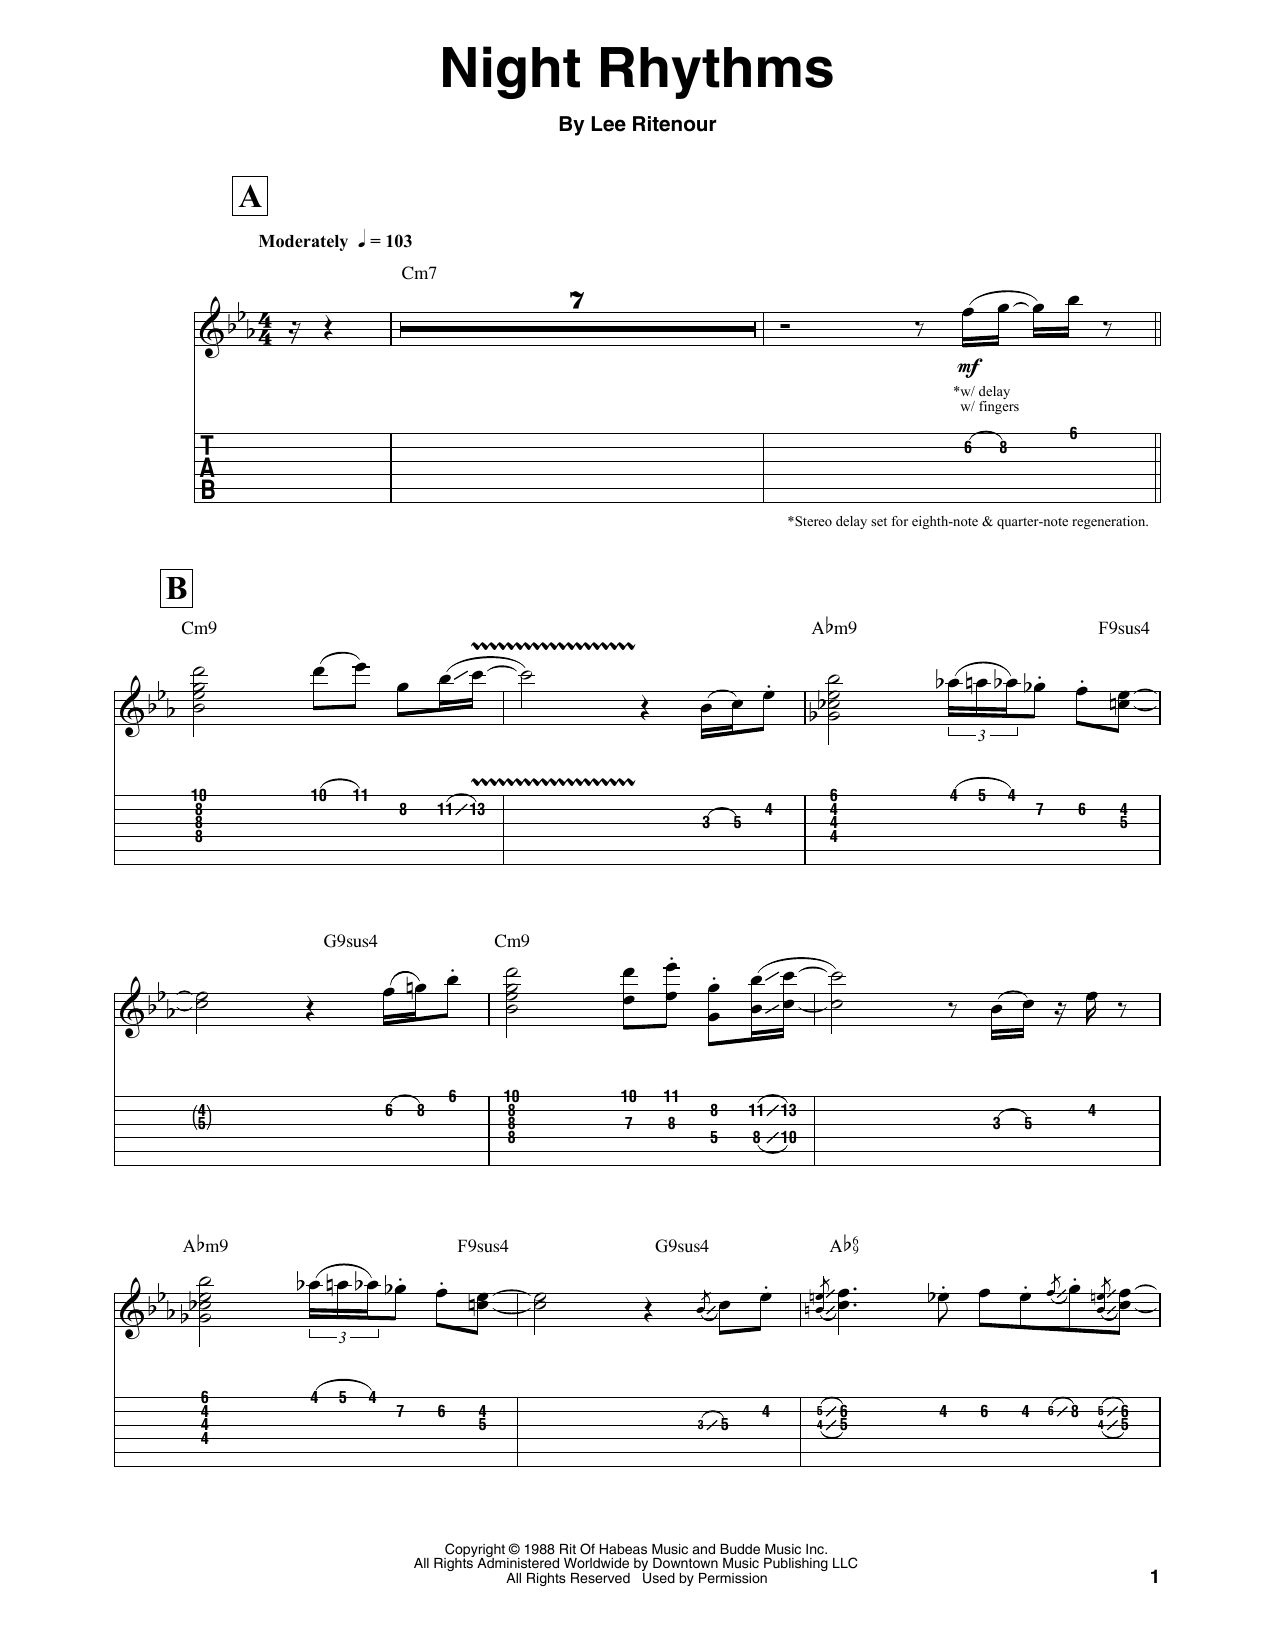 Lee Ritenour Night Rhythms Sheet Music Notes & Chords for Guitar Tab (Single Guitar) - Download or Print PDF